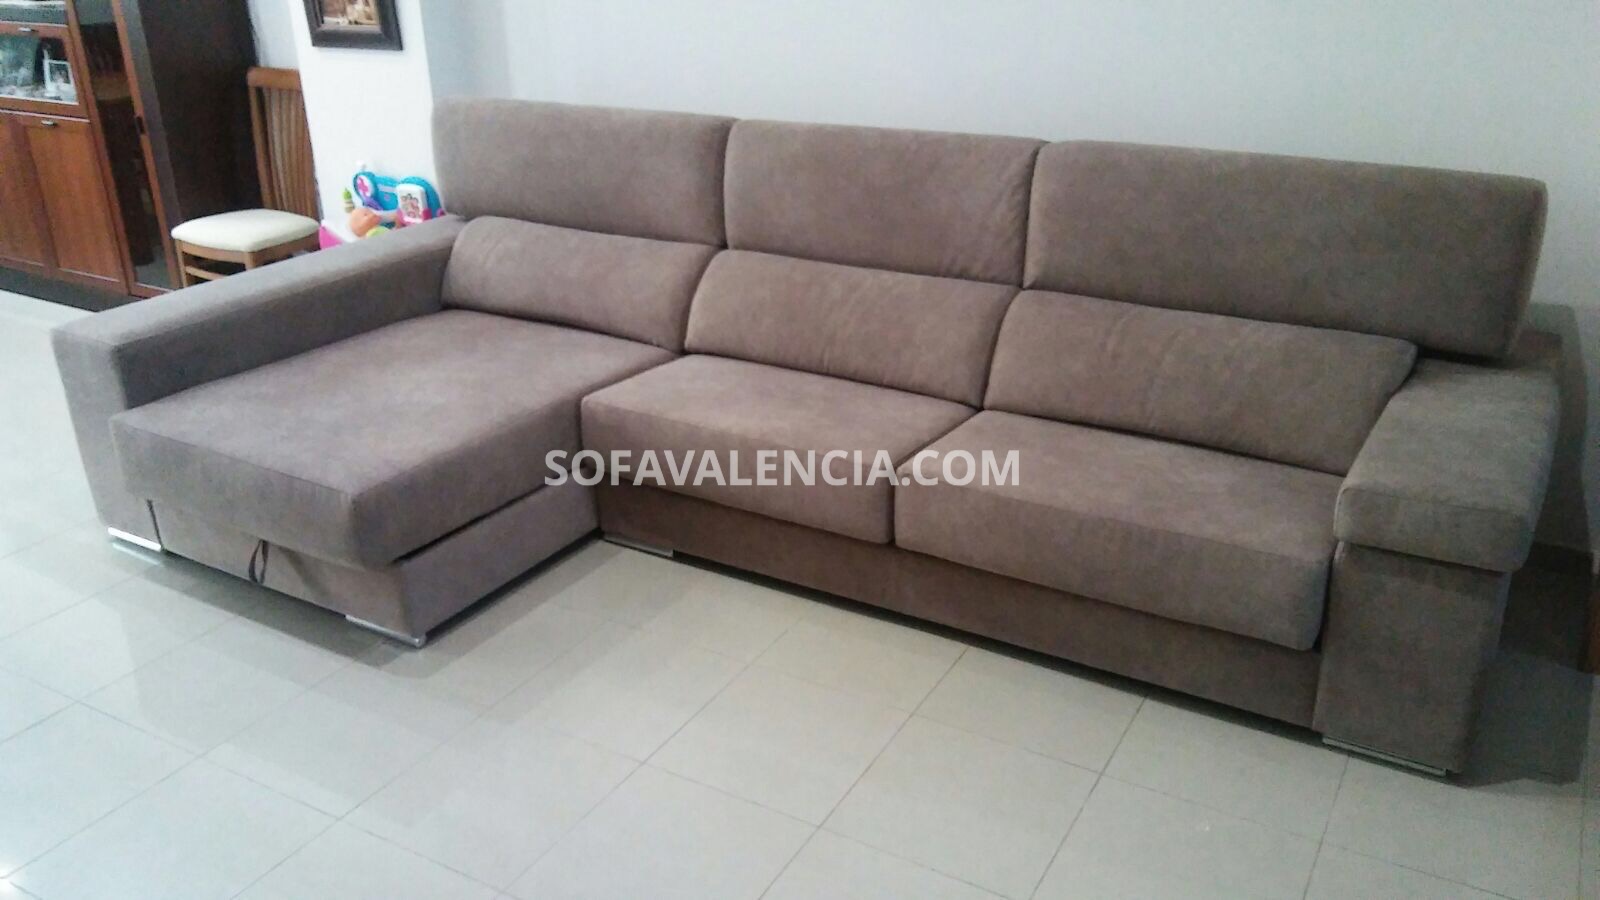 sofa-valencia-fotos-clientes-79